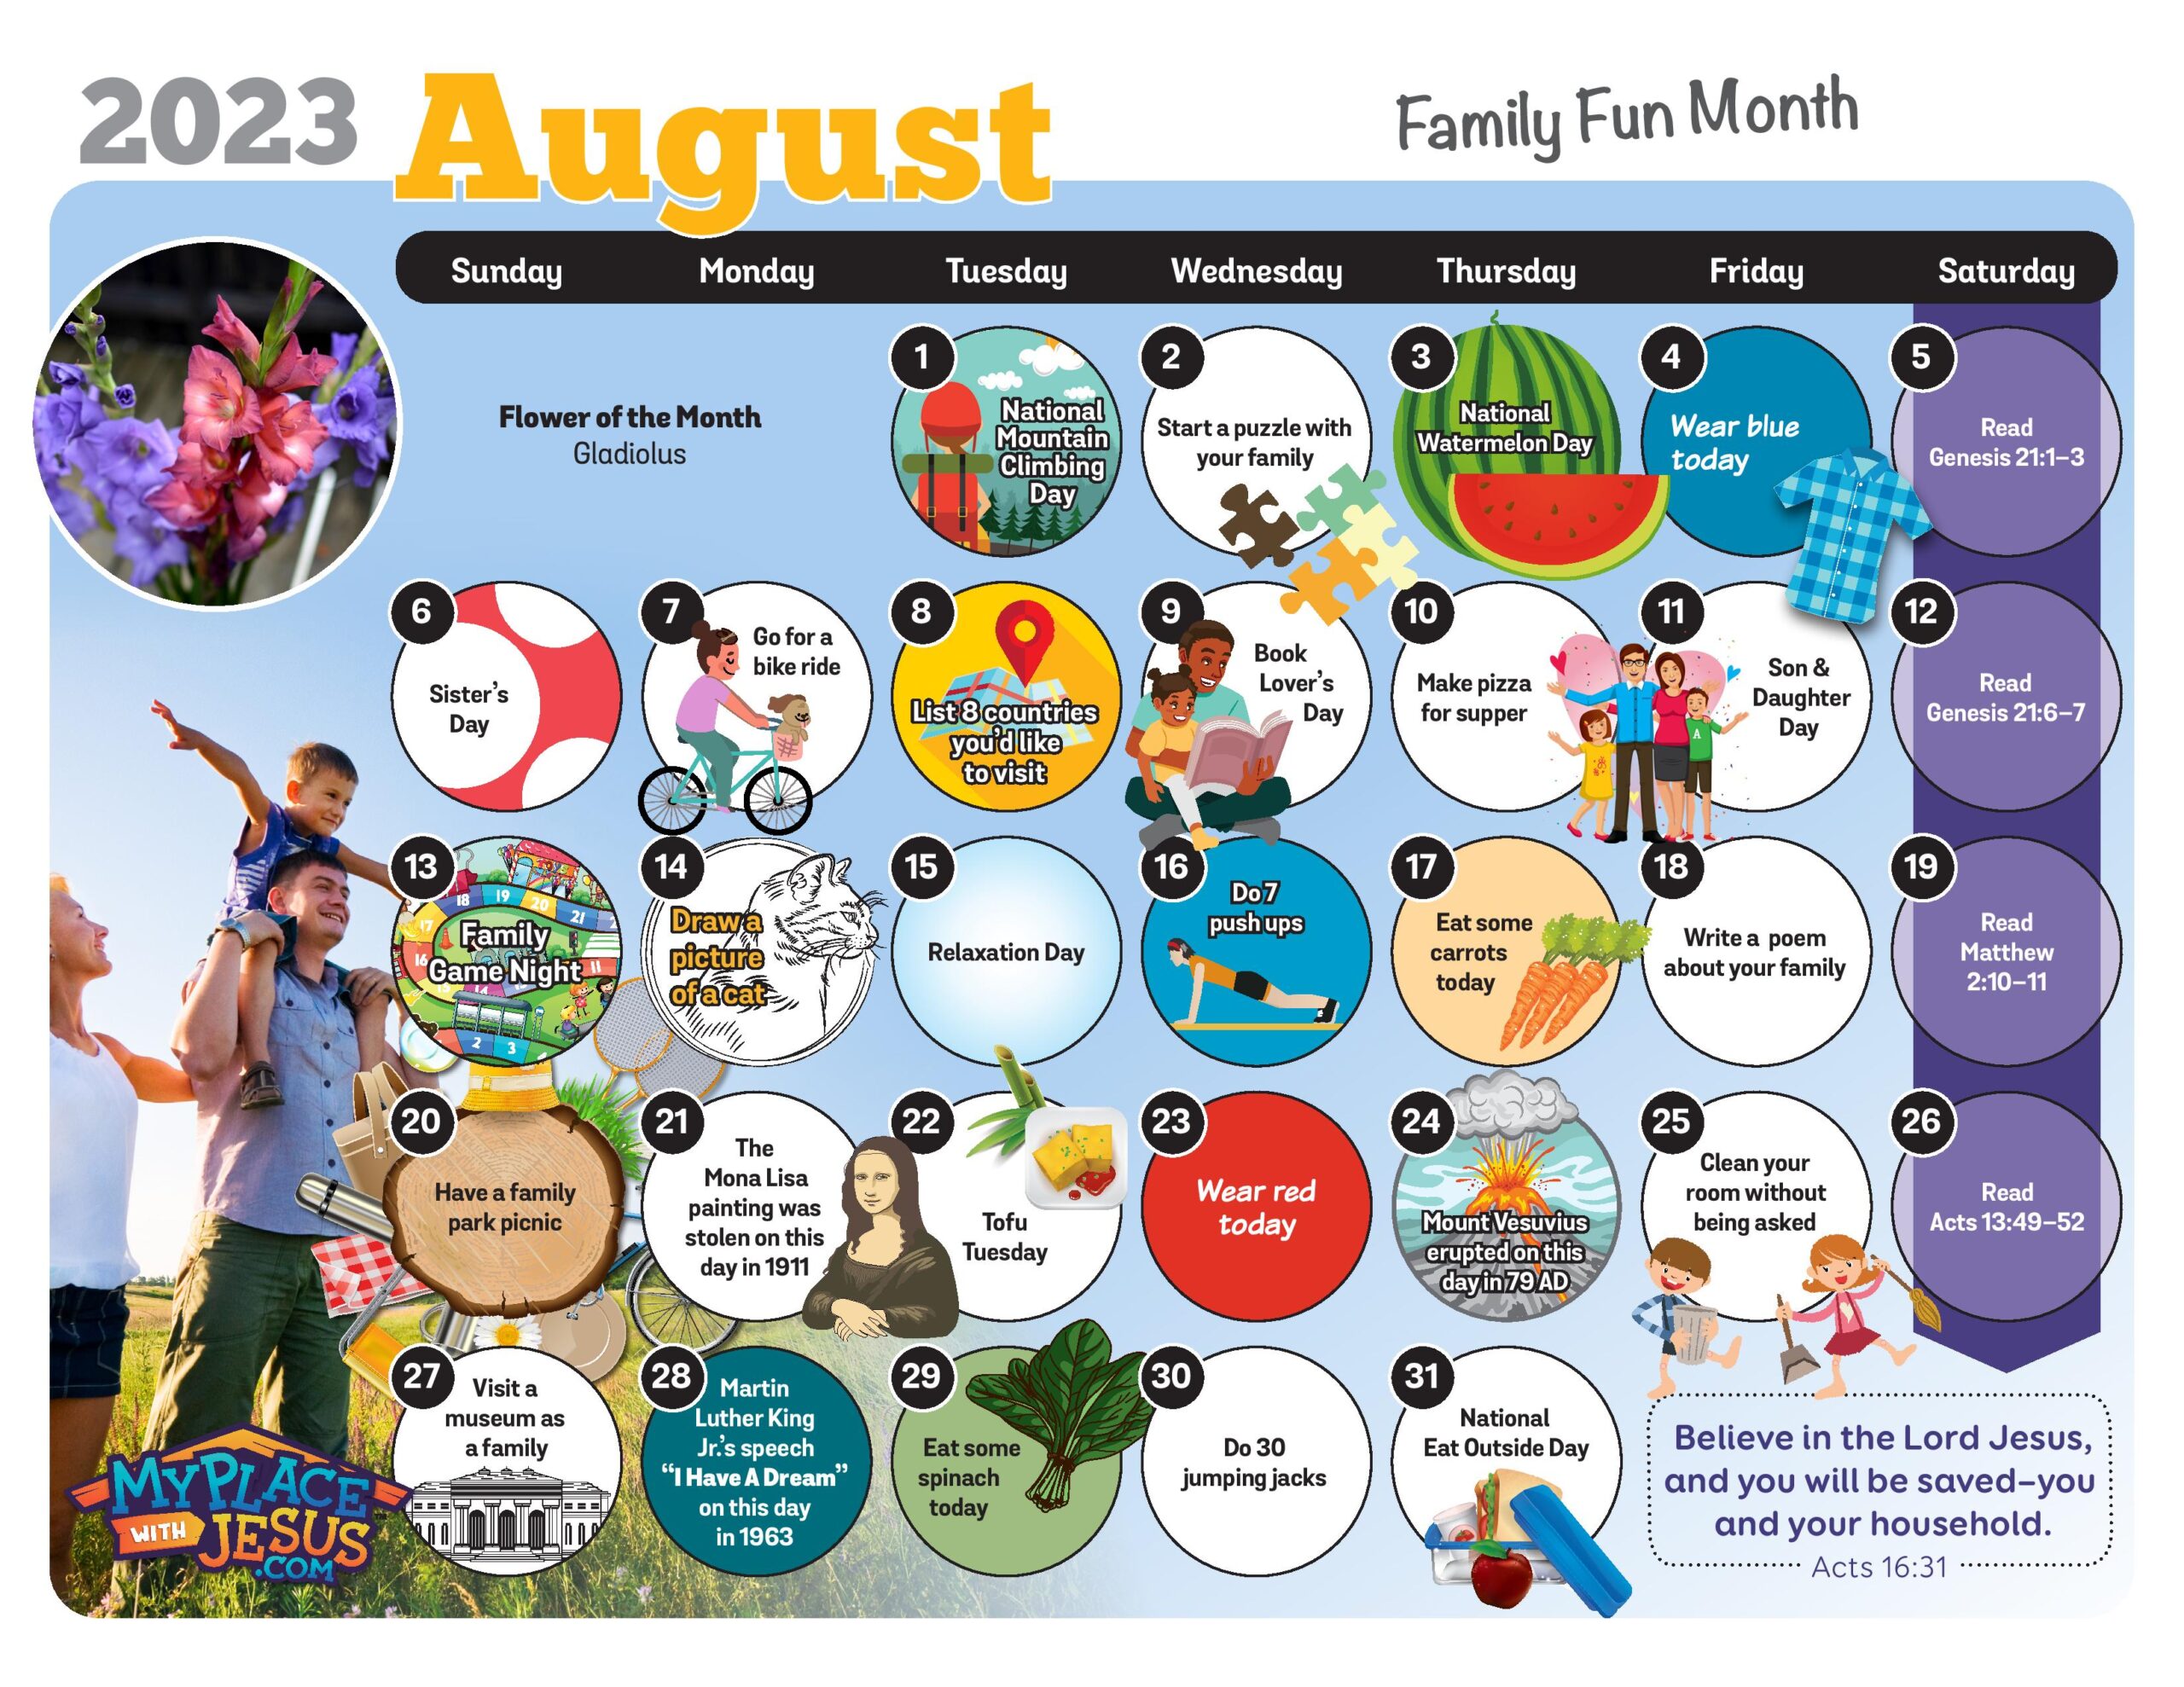 Download the August Activity Calendar